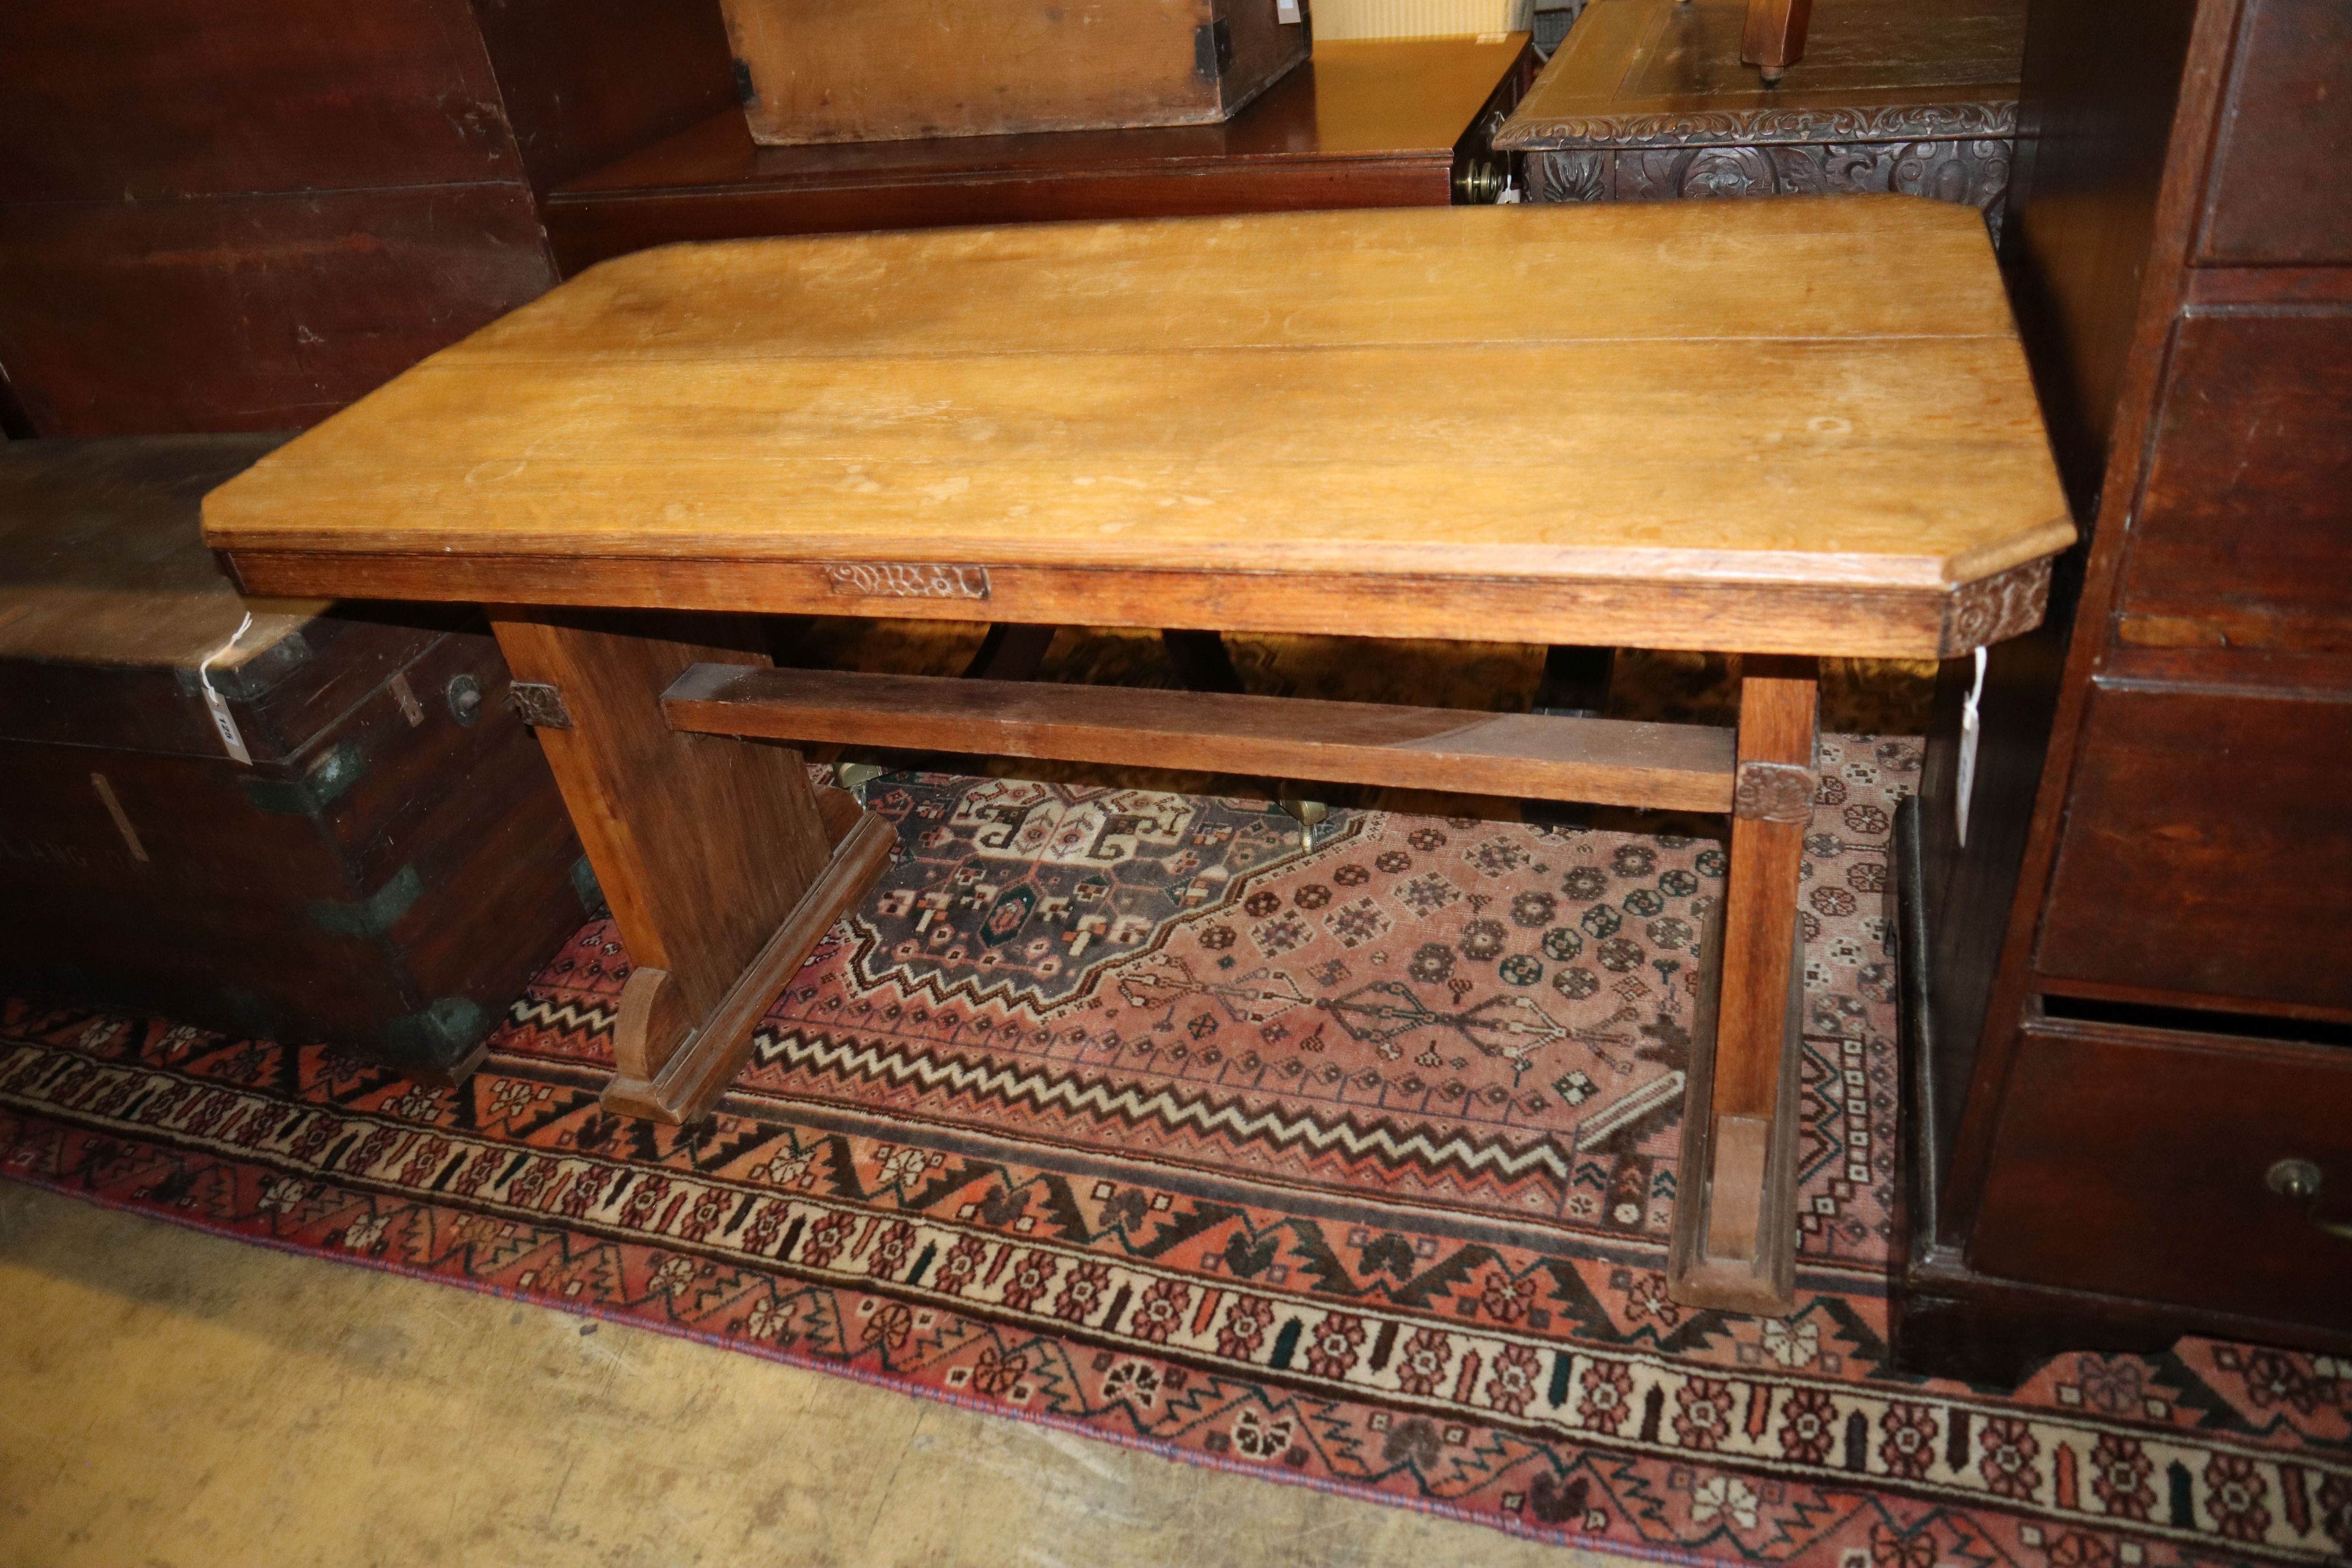 An Art Deco oak centre table, width 120cm, depth 60cm, height 68cm